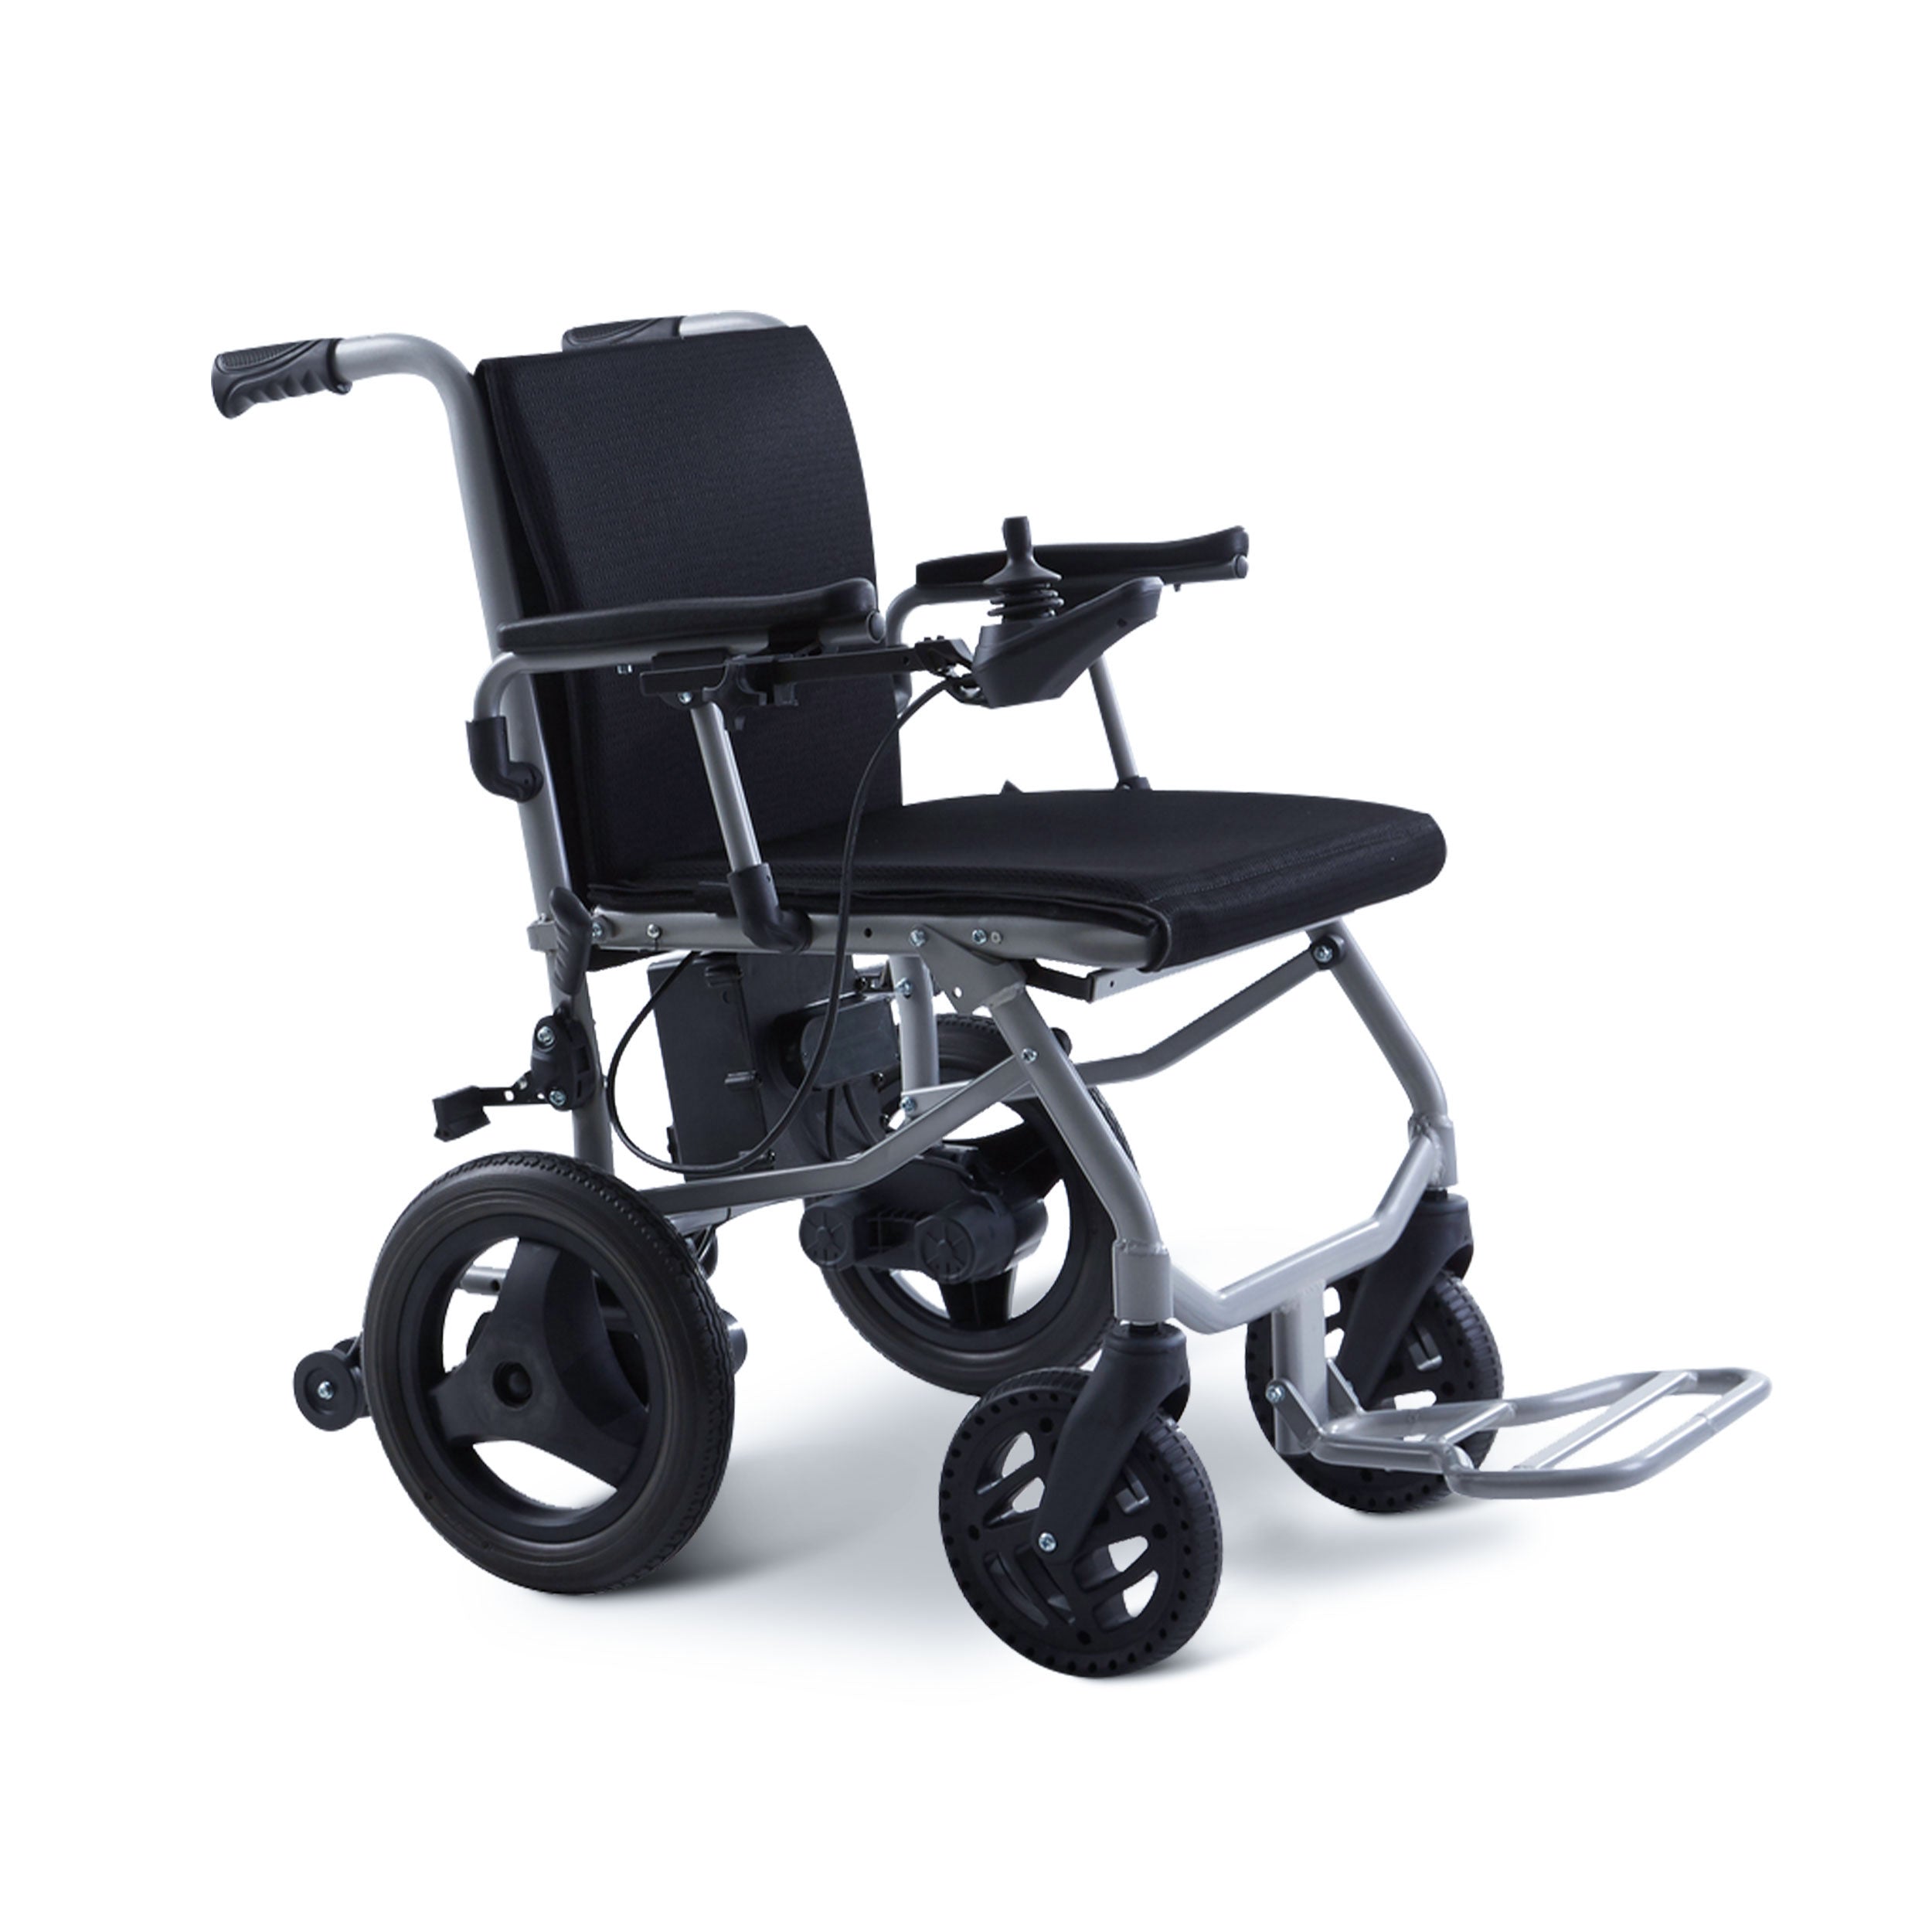 Klano KL40 - The World's Lightest Electric Wheelchair